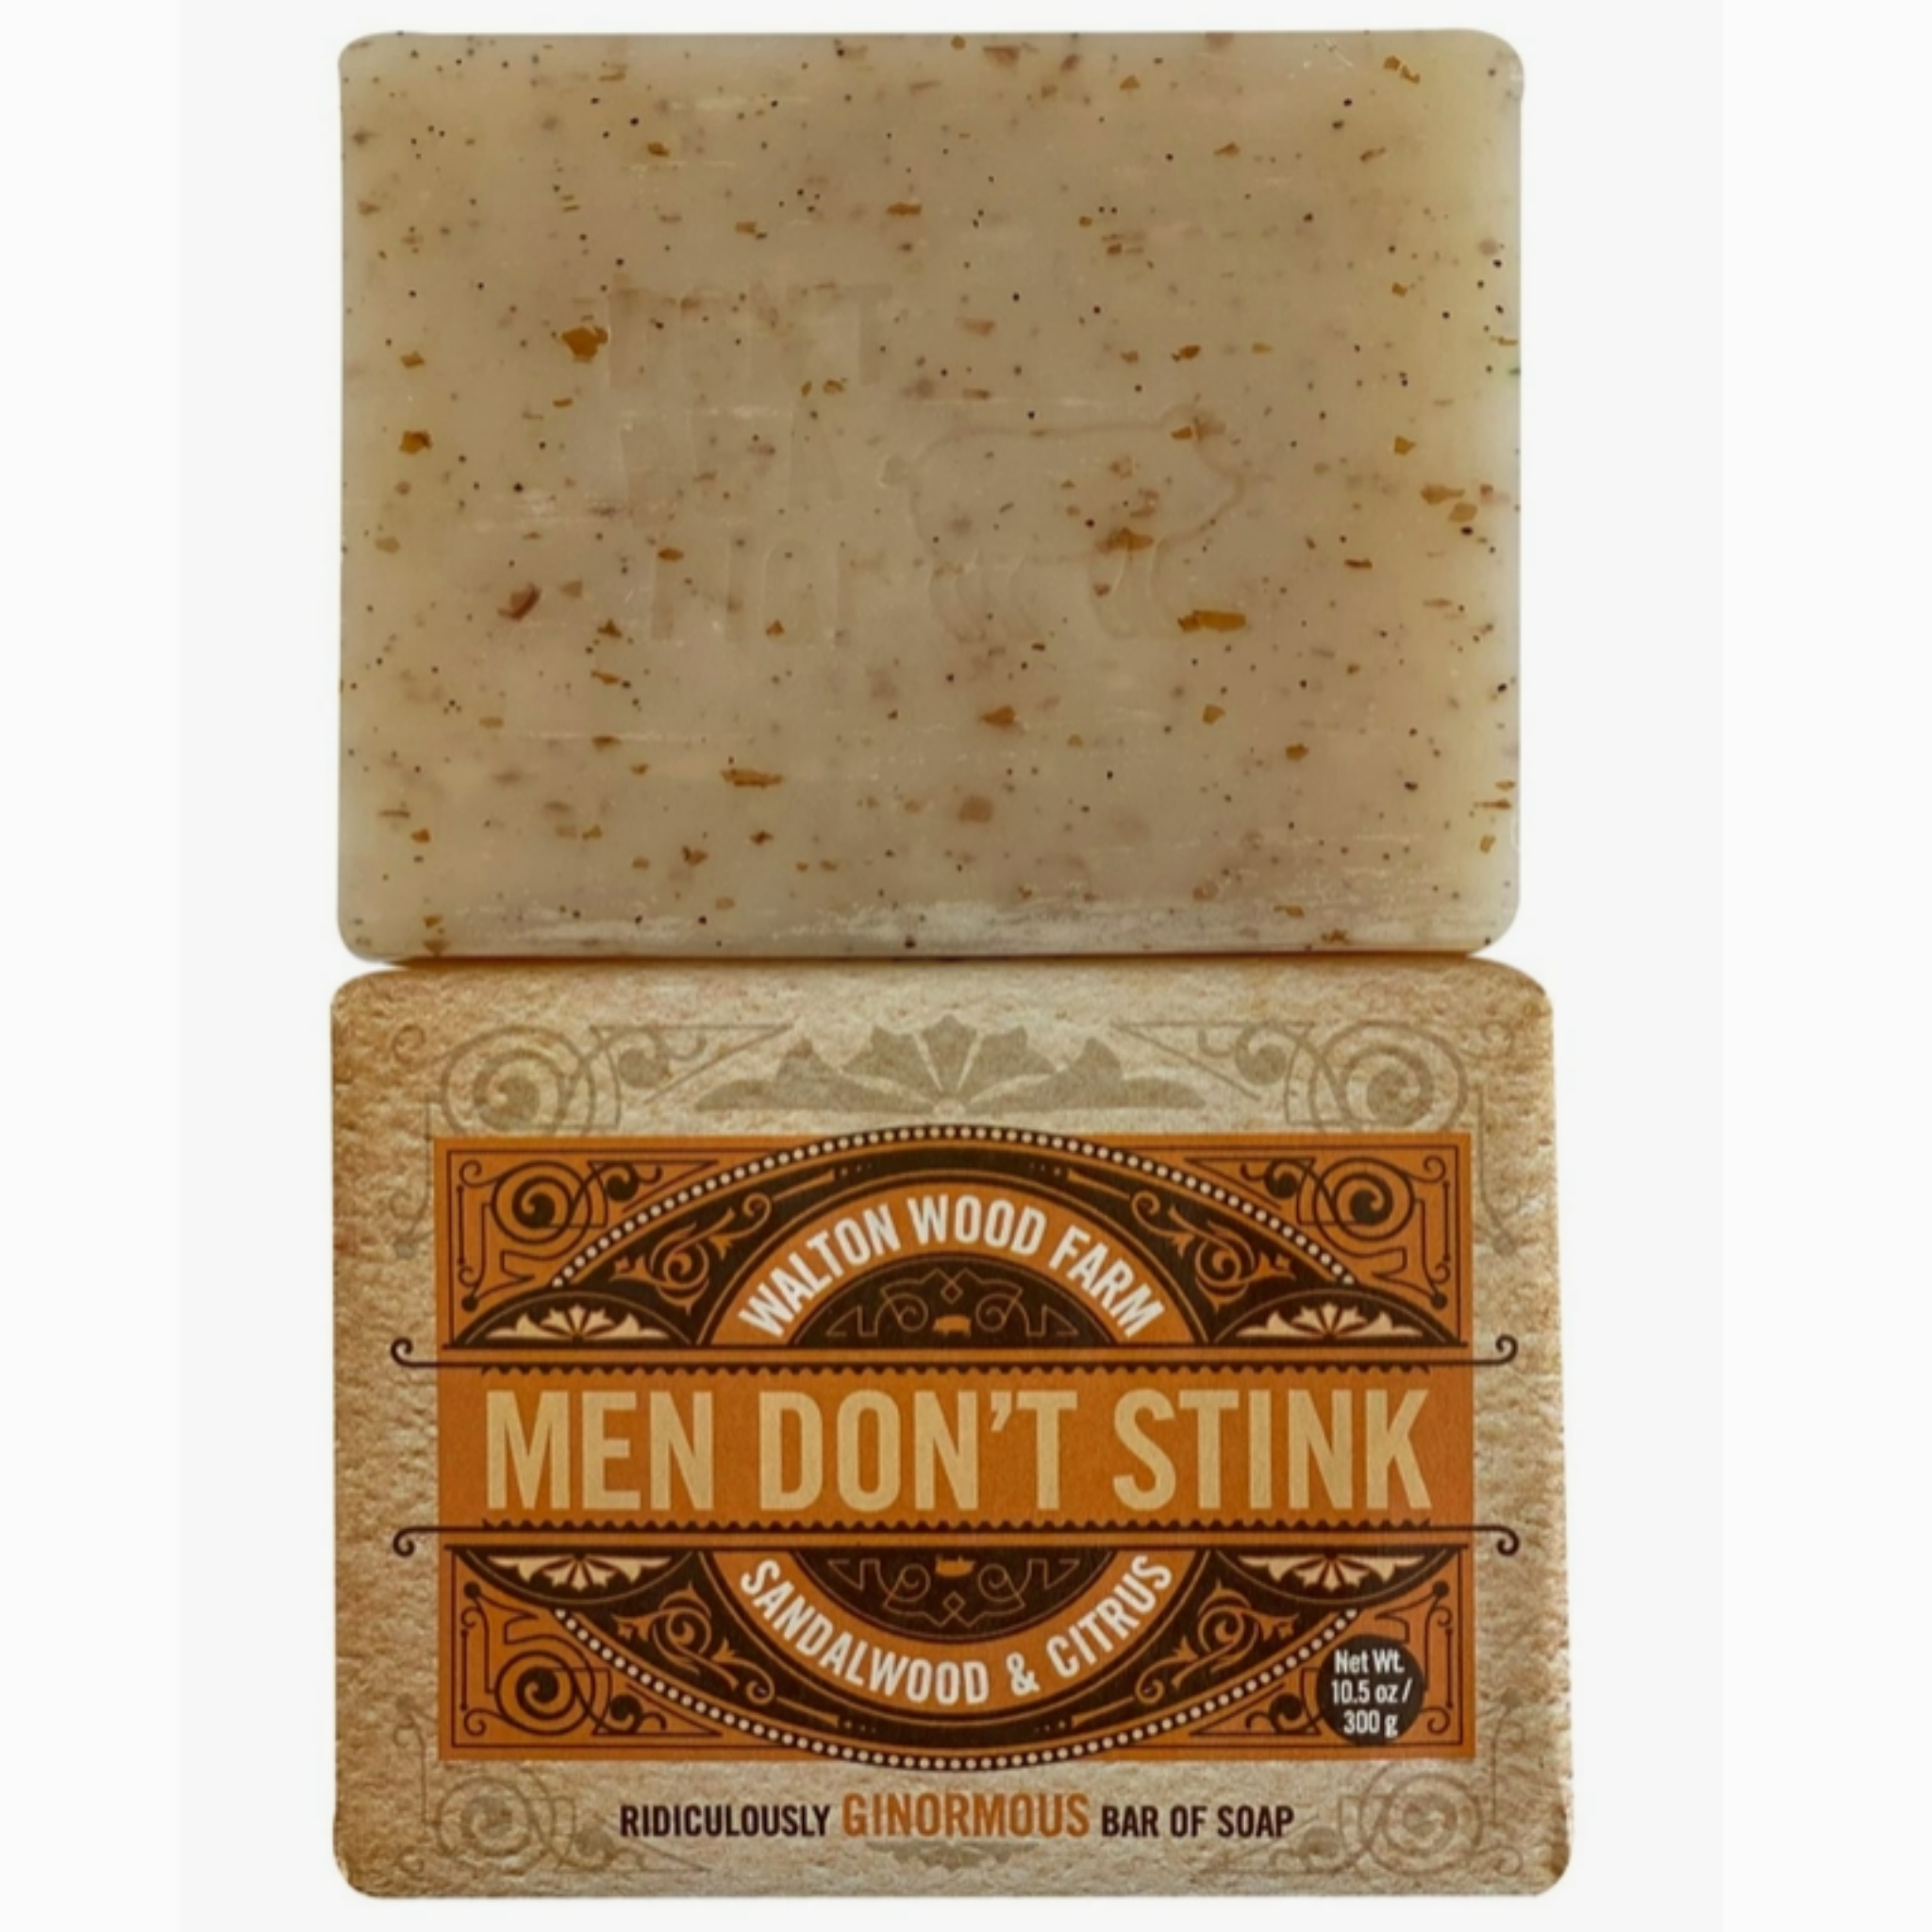 Walton Wood Farm Men Don't Stink 8 oz - Don't be a pig Soap Bar for Men - MerryBath.com